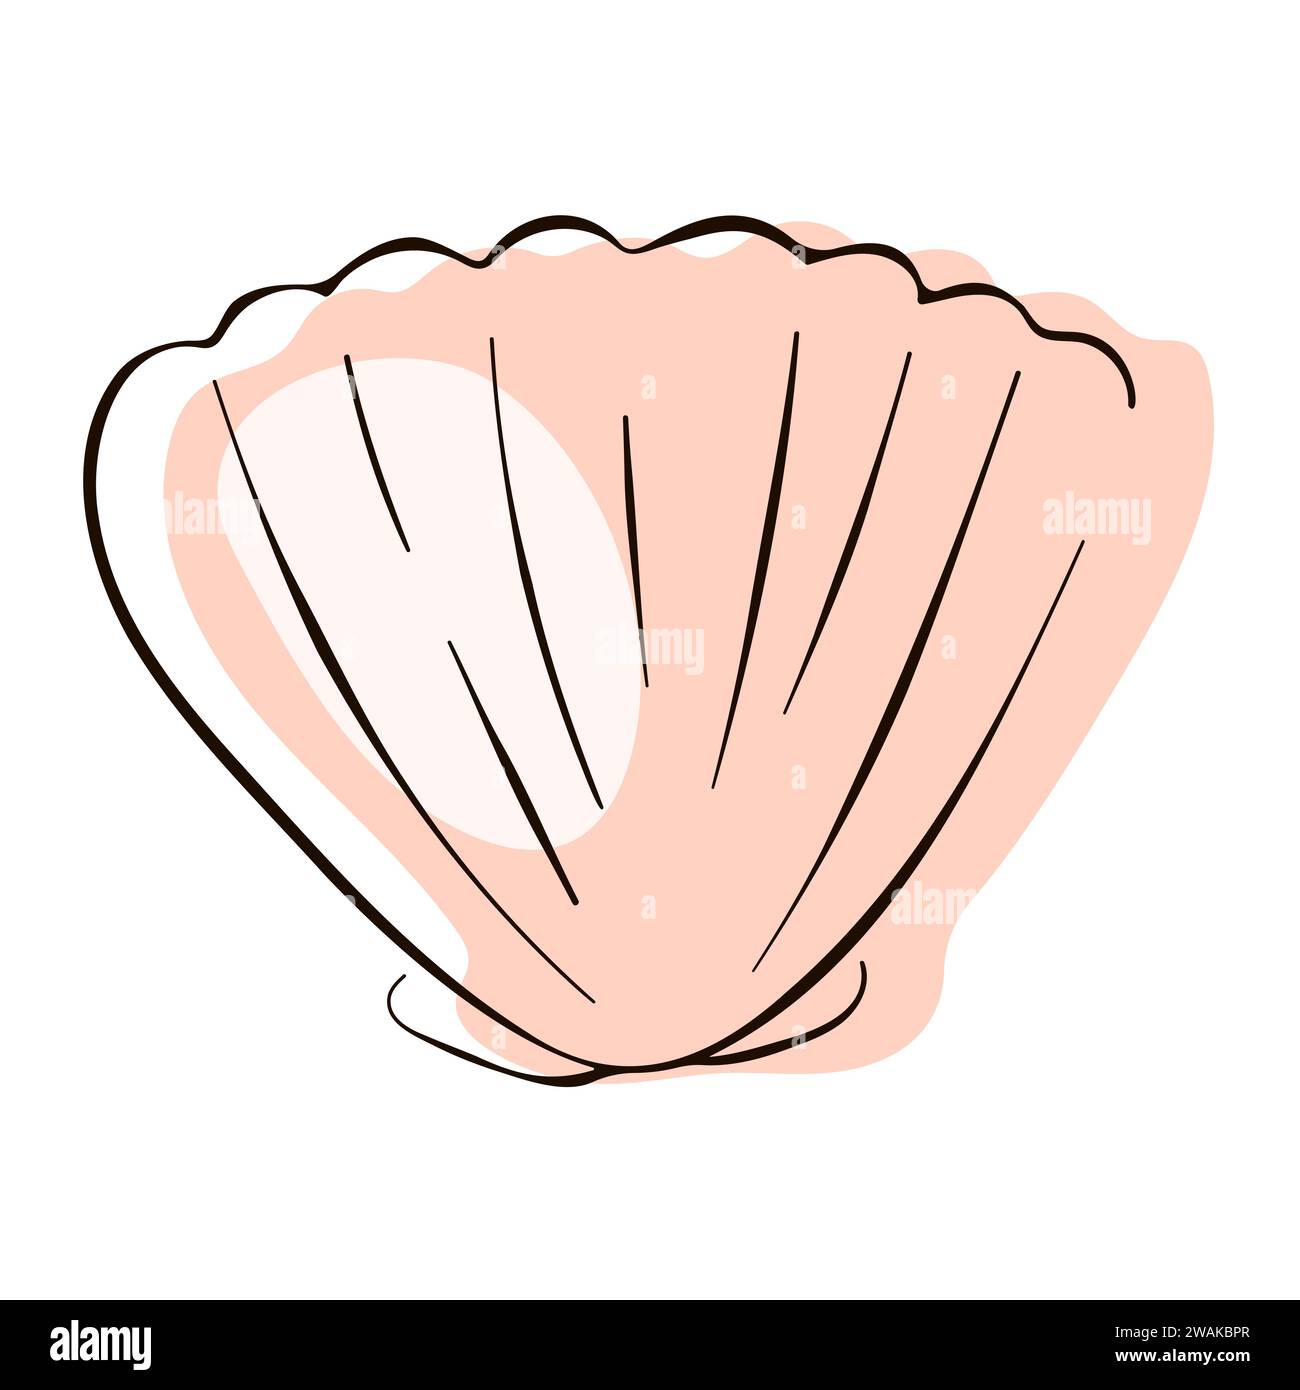 Vieiras Seashell logo en estilo de arte de línea. Shell diseño submarino para restaurante de mariscos. Ilustración vectorial aislada sobre un fondo blanco Ilustración del Vector